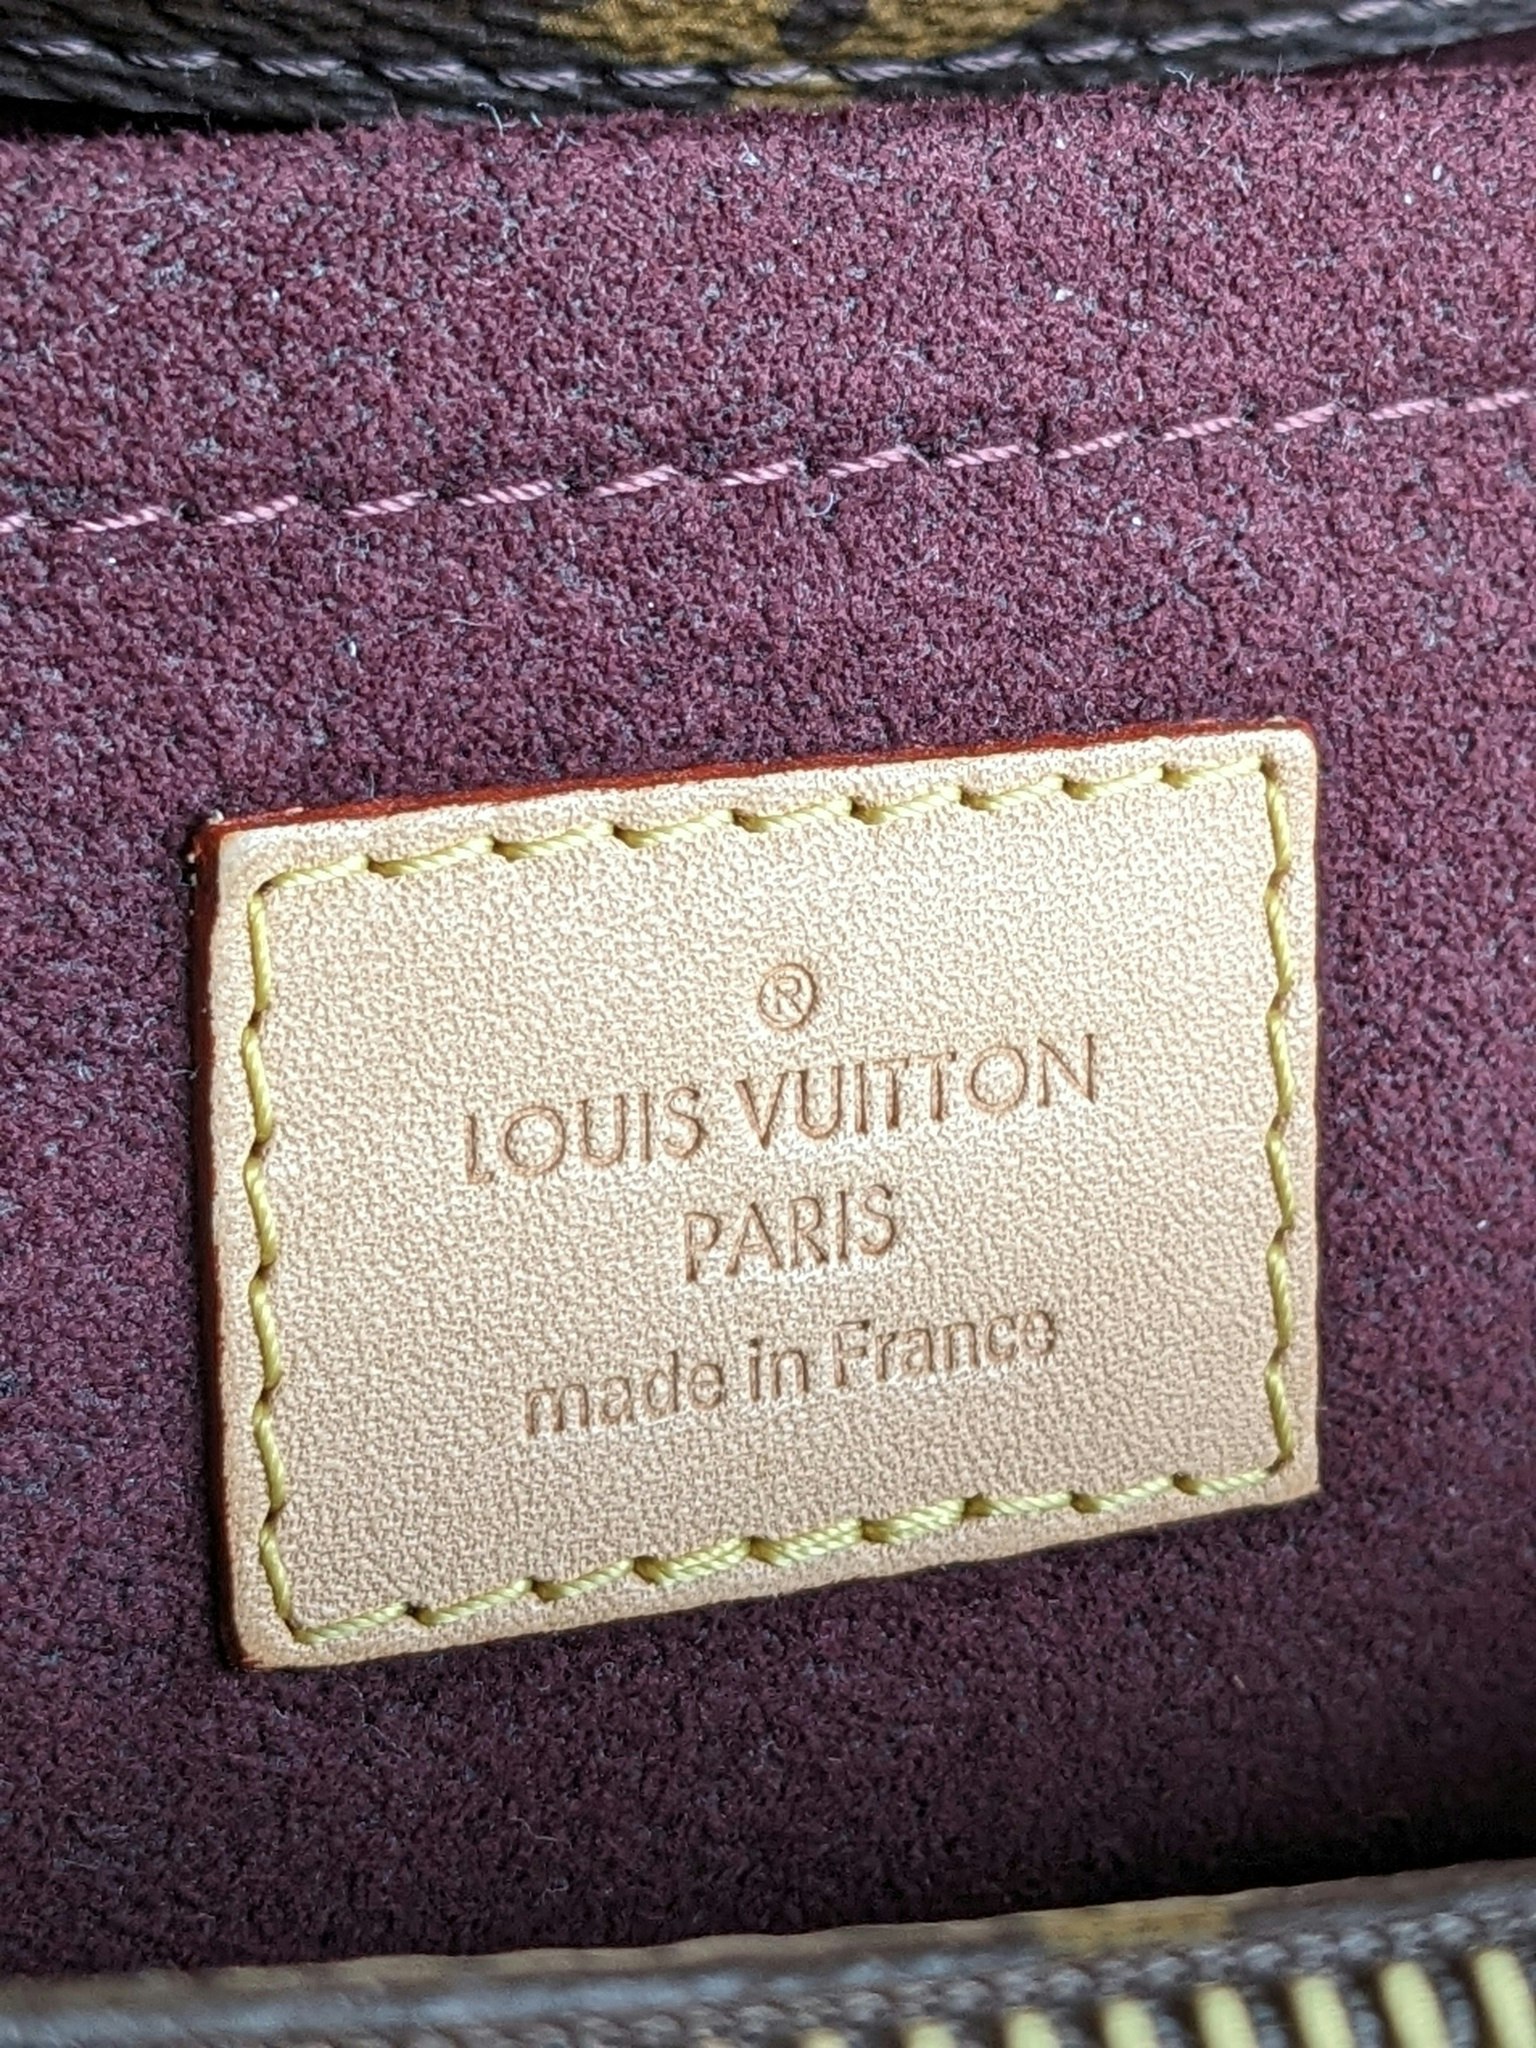 Louis Vuitton Montaigne GM